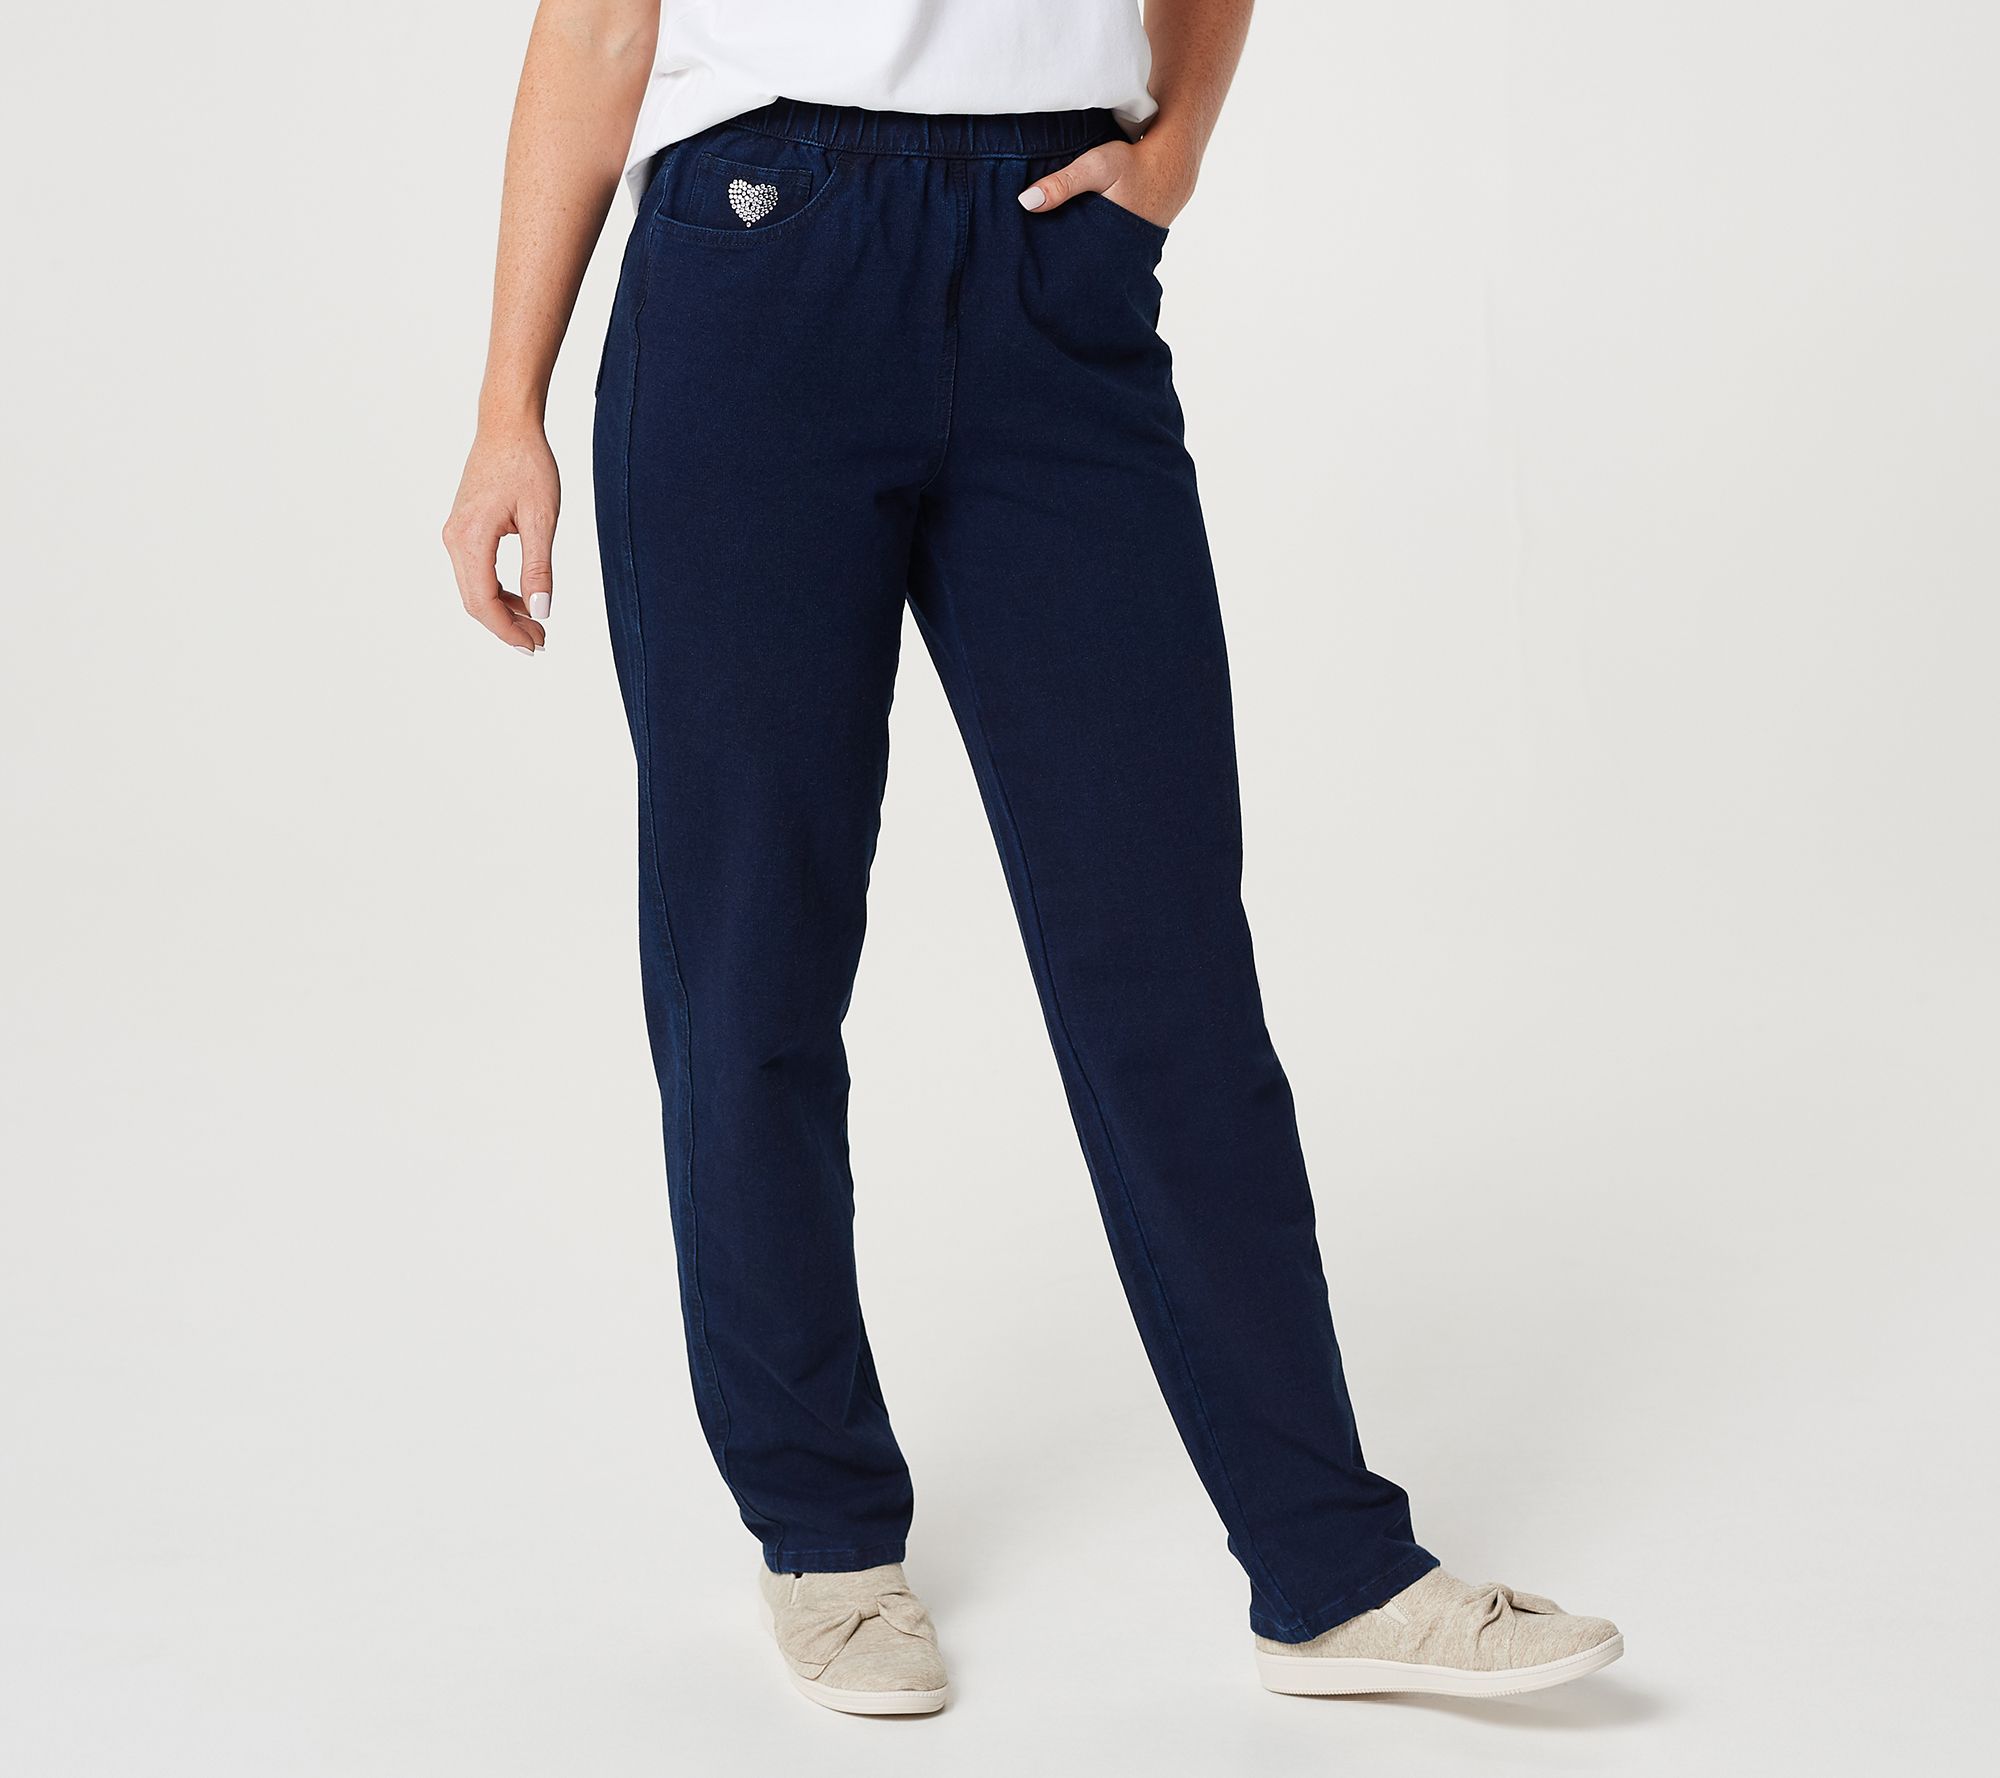 Quacker Factory DreamJeannes Regular Pull-On 5 Pocket Boot Cut Pants 